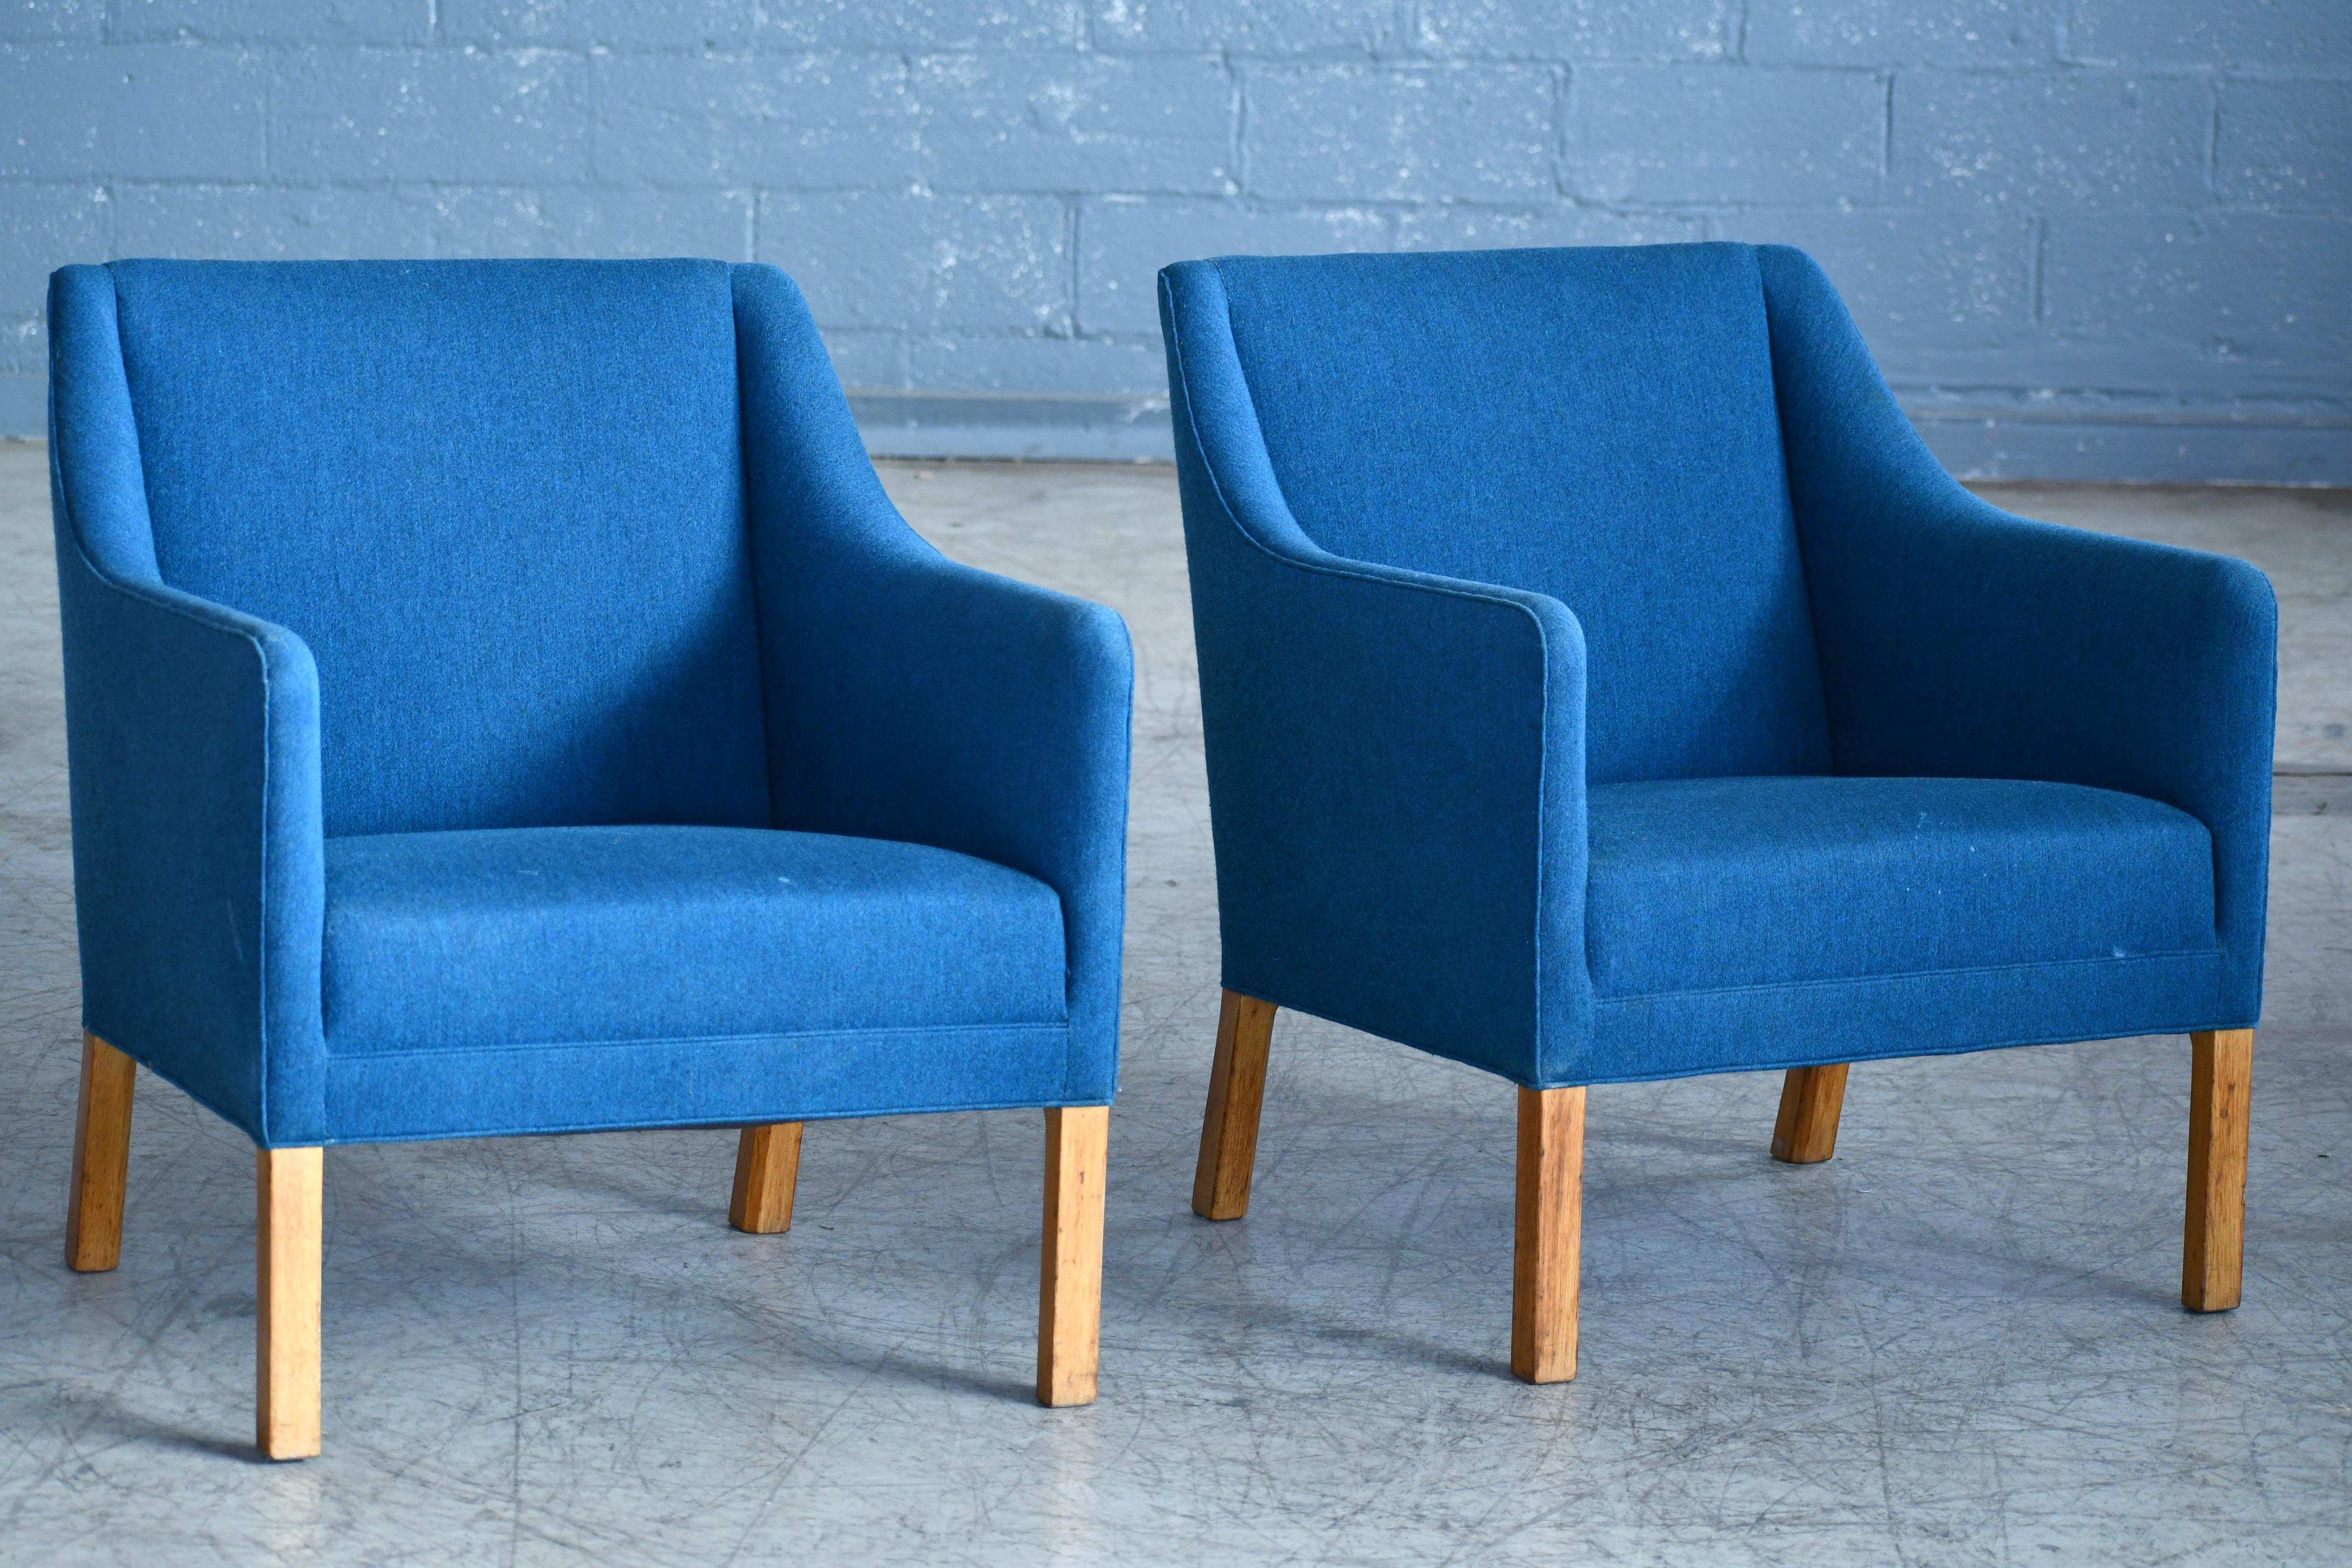 Mid-Century Modern Pair of Danish Midcentury Lounge Chairs Attributed to Ejnar Larsen & Axel Bender